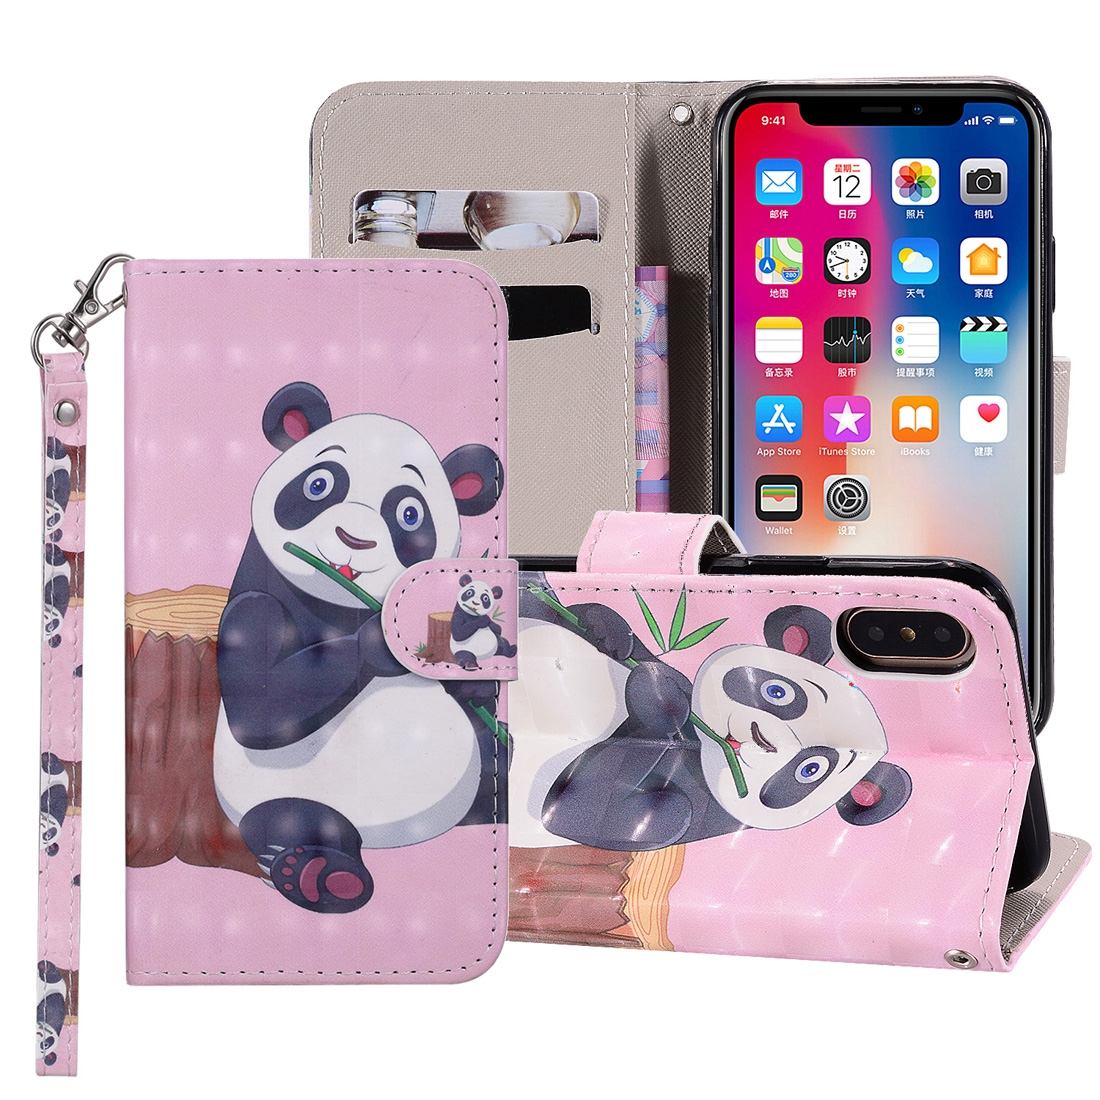 Panda Pattern Folio Leather Case For iPhone XR,Holder,Card Slots,Wallet,Lanyard